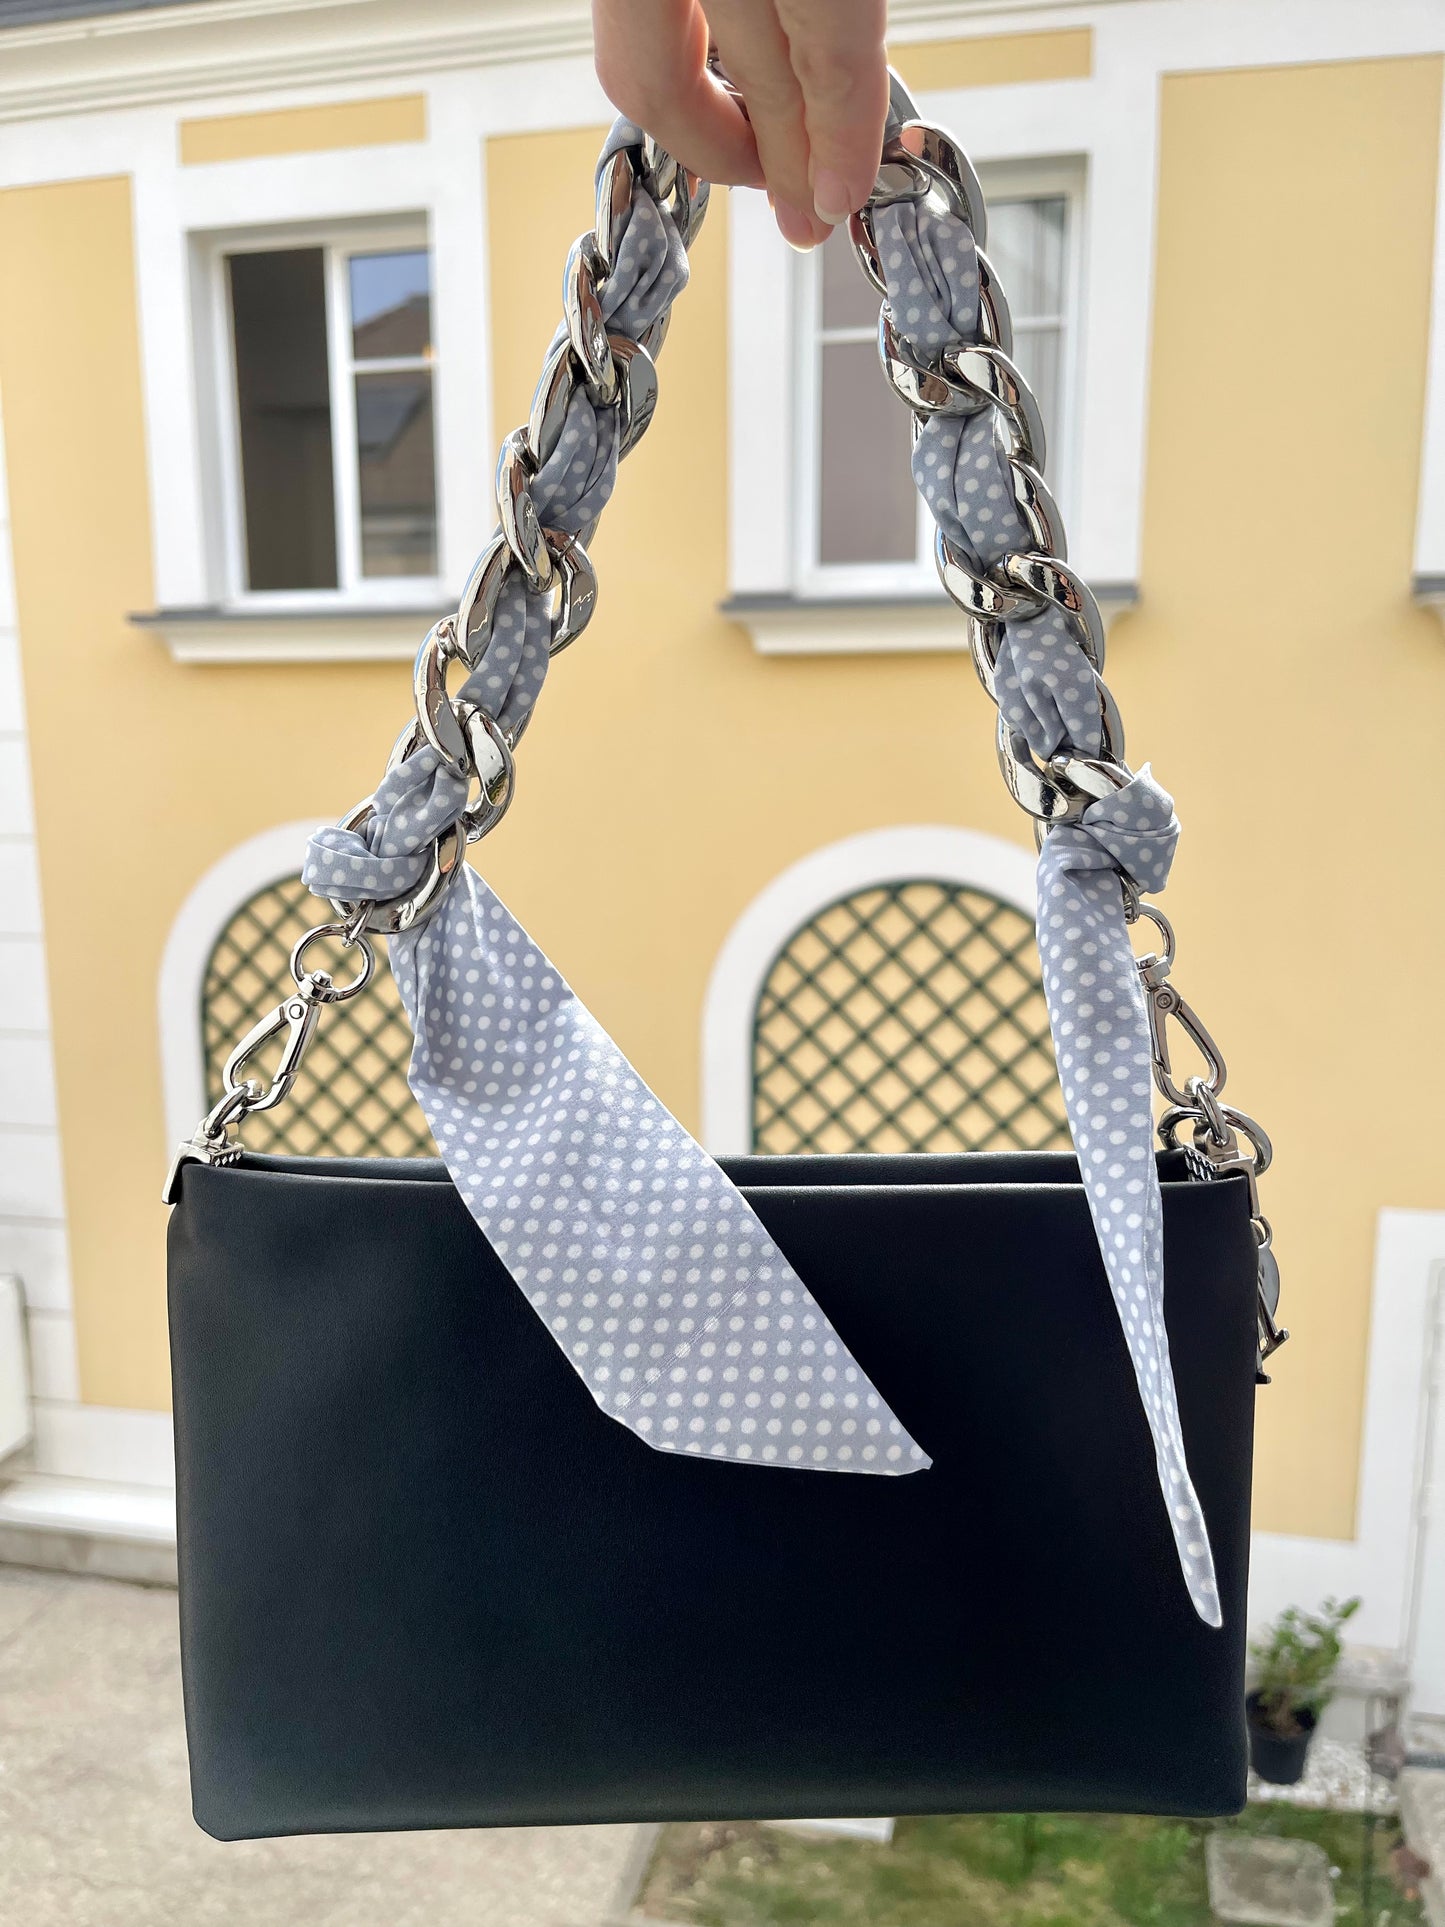 Dior beauty customized shoulder bag